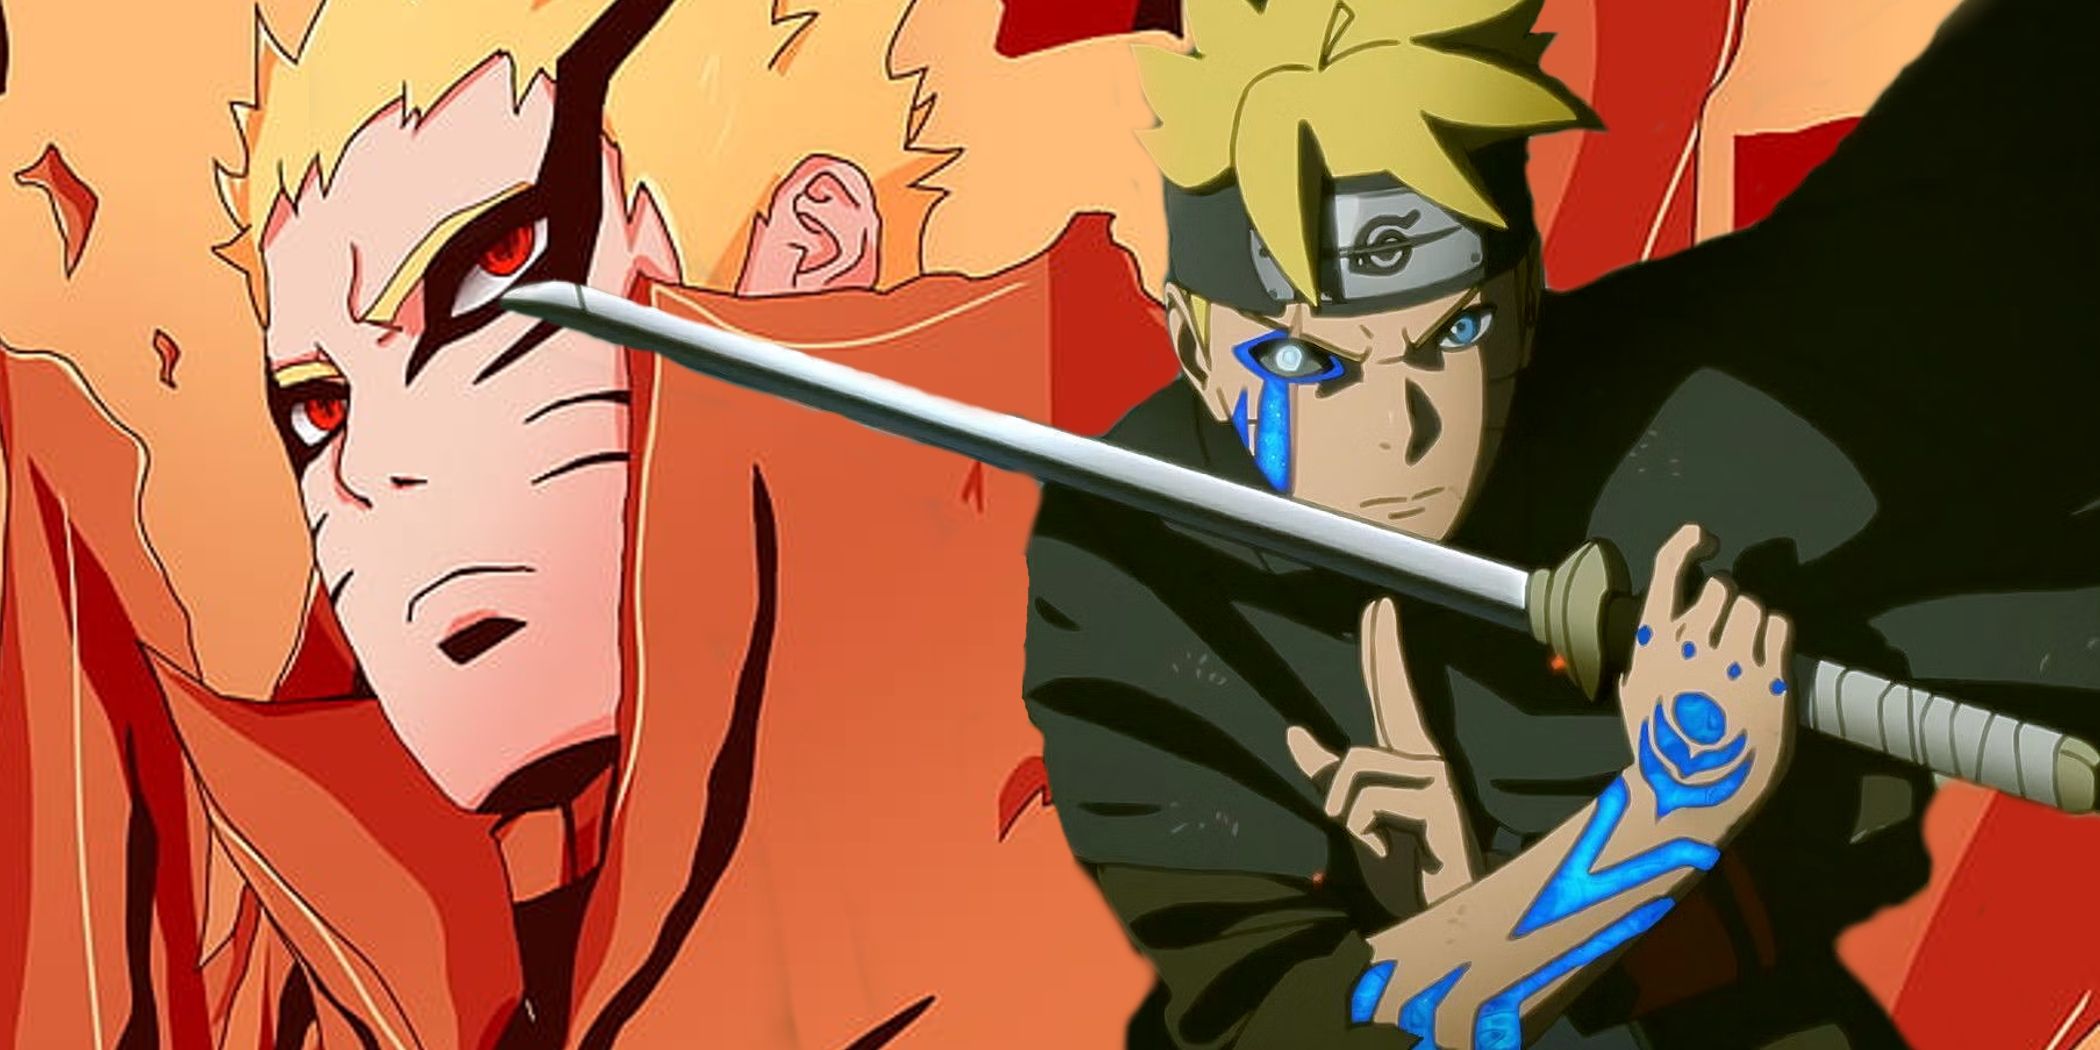 Boruto Unleashes Naruto's Baryon Mode in Stunning Fight: Watch